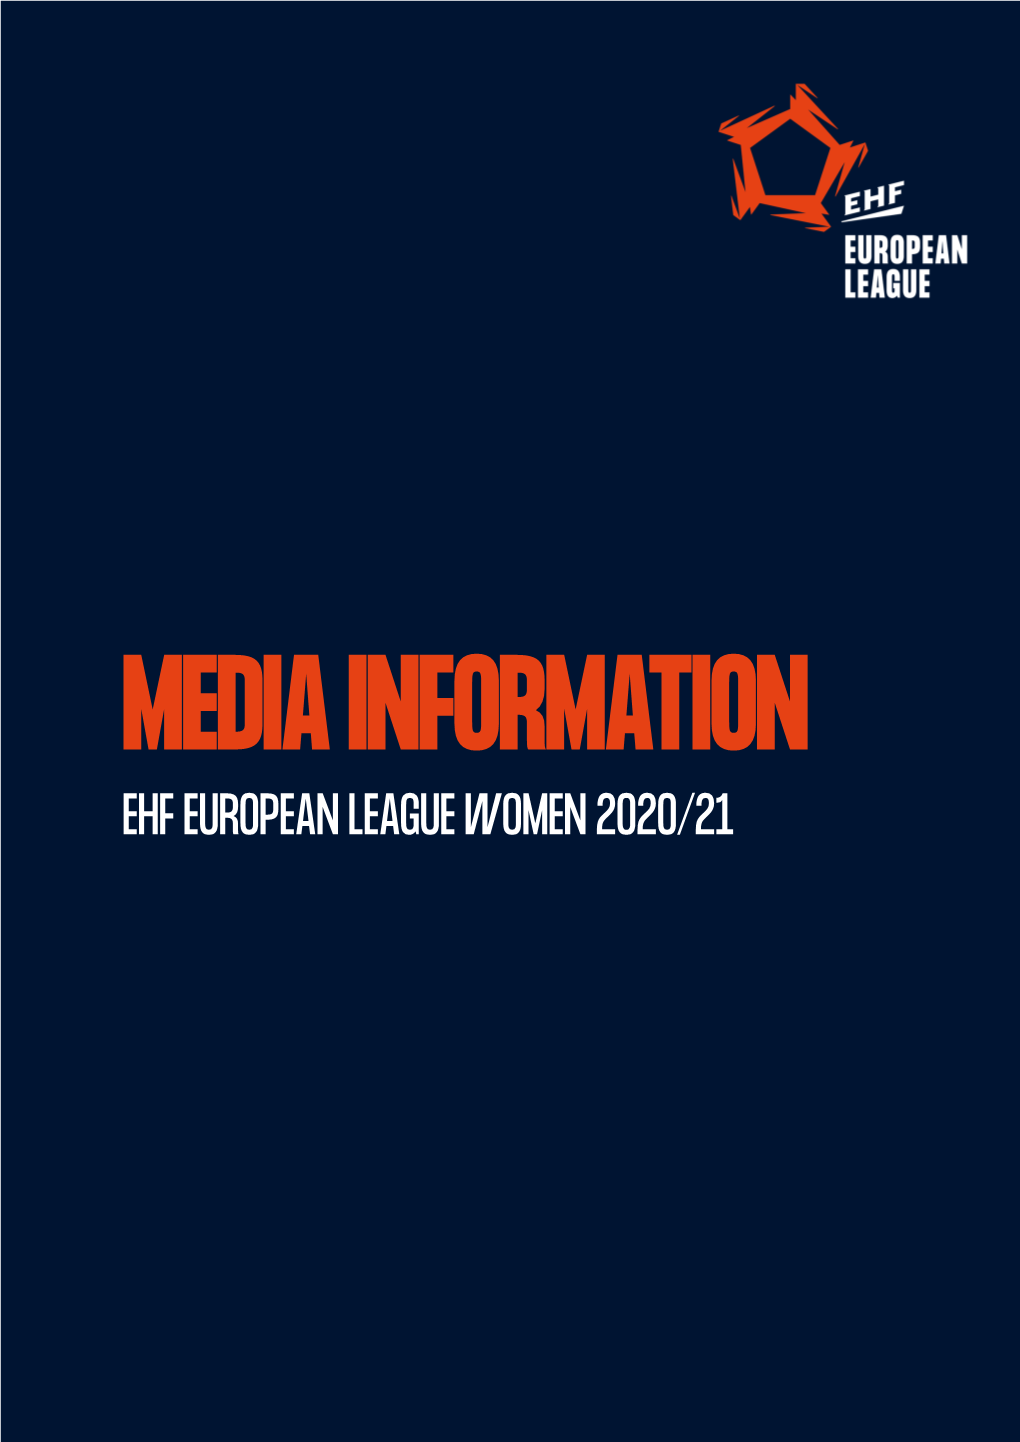 EHF European League Women 2020/21 Season Information 471.0 Kb